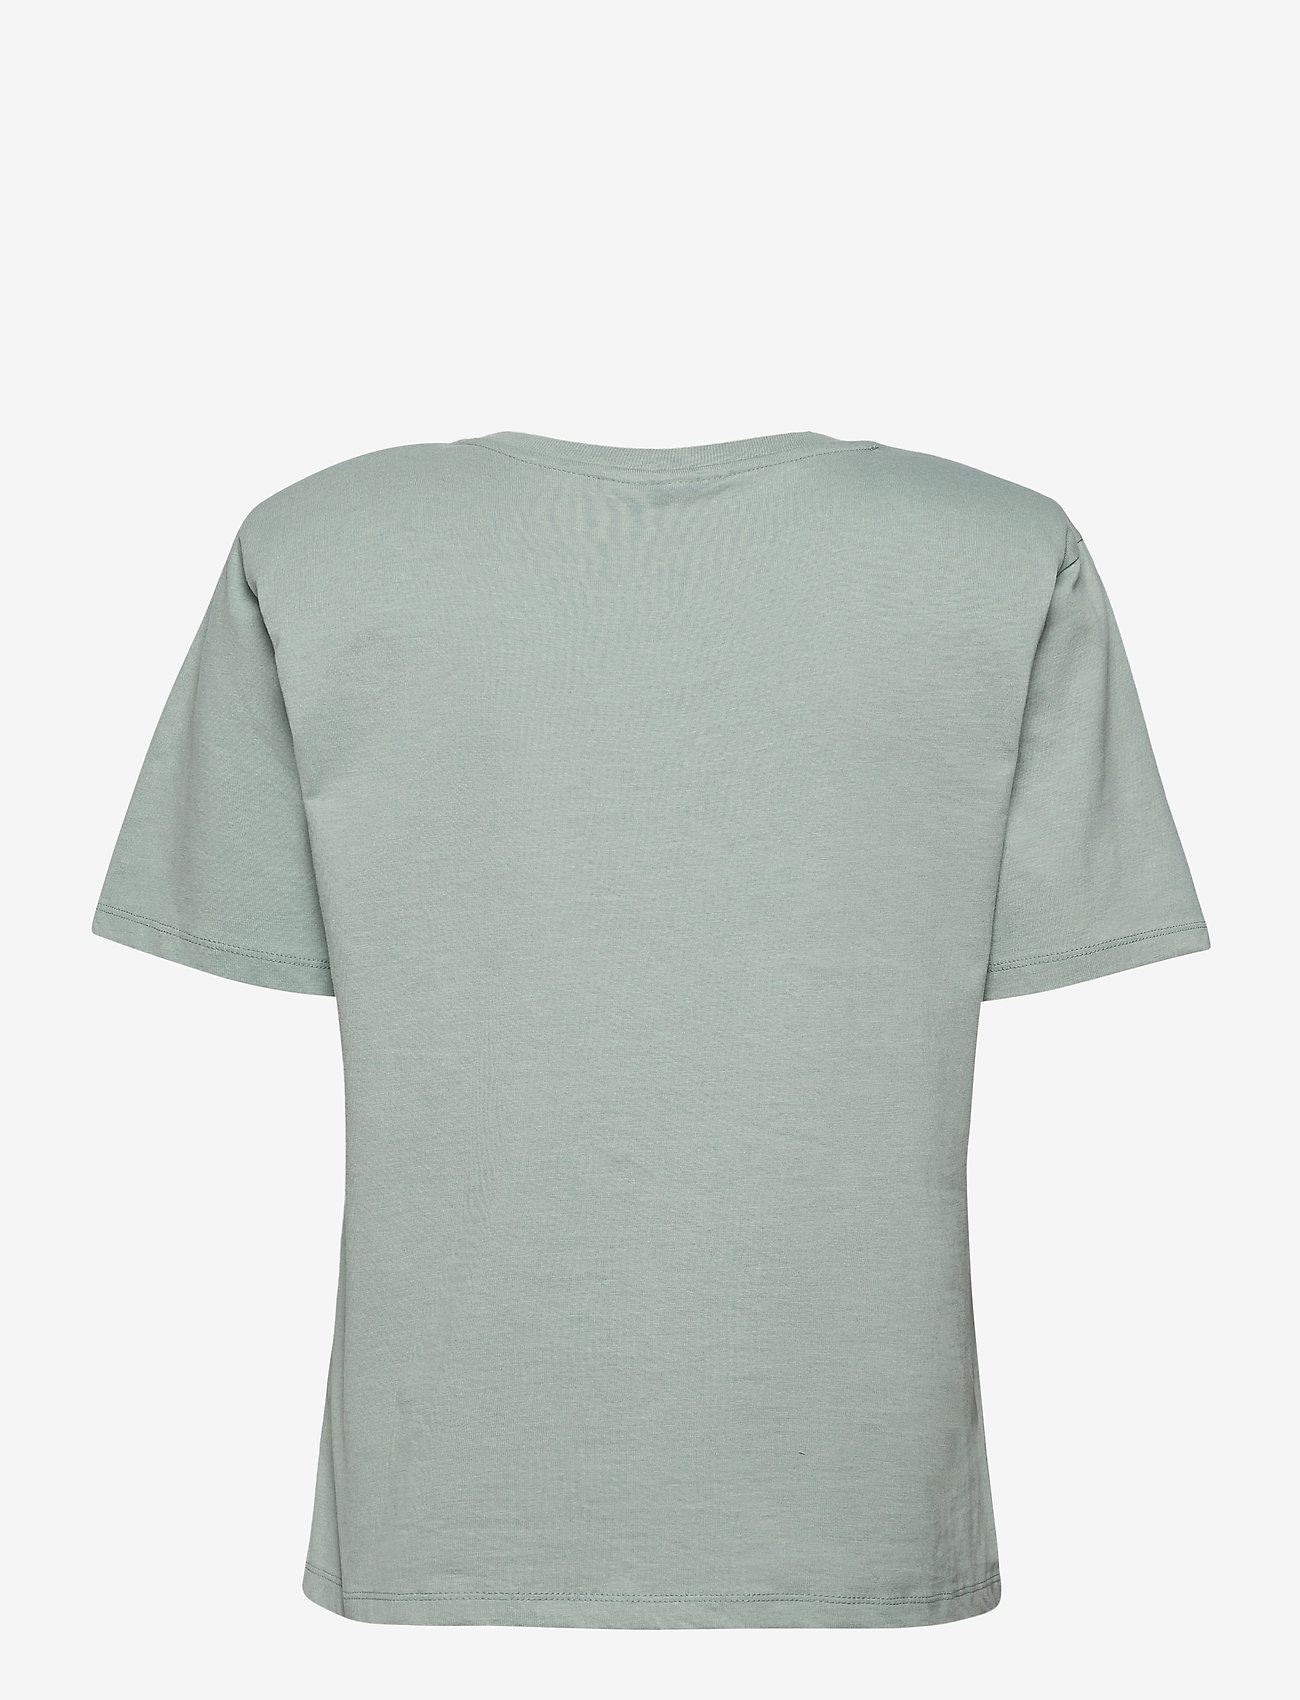 Gestuz - JoryGZ tee - t-shirts & tops - slate gray - 1